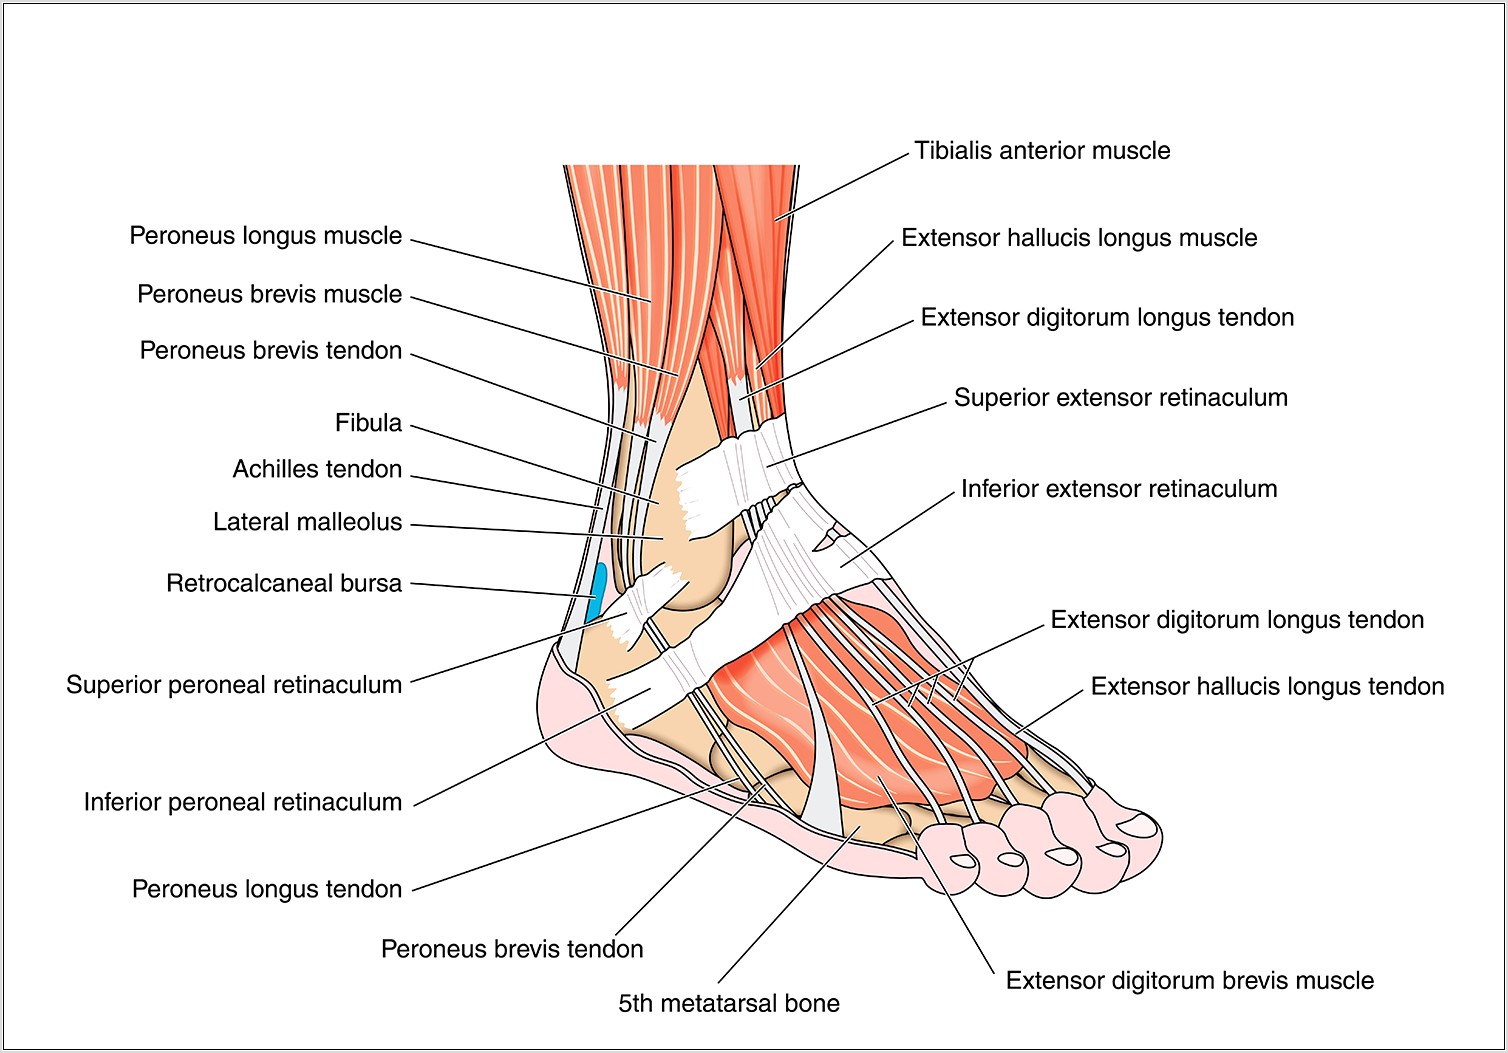 Bottom Of Foot Pain Diagram